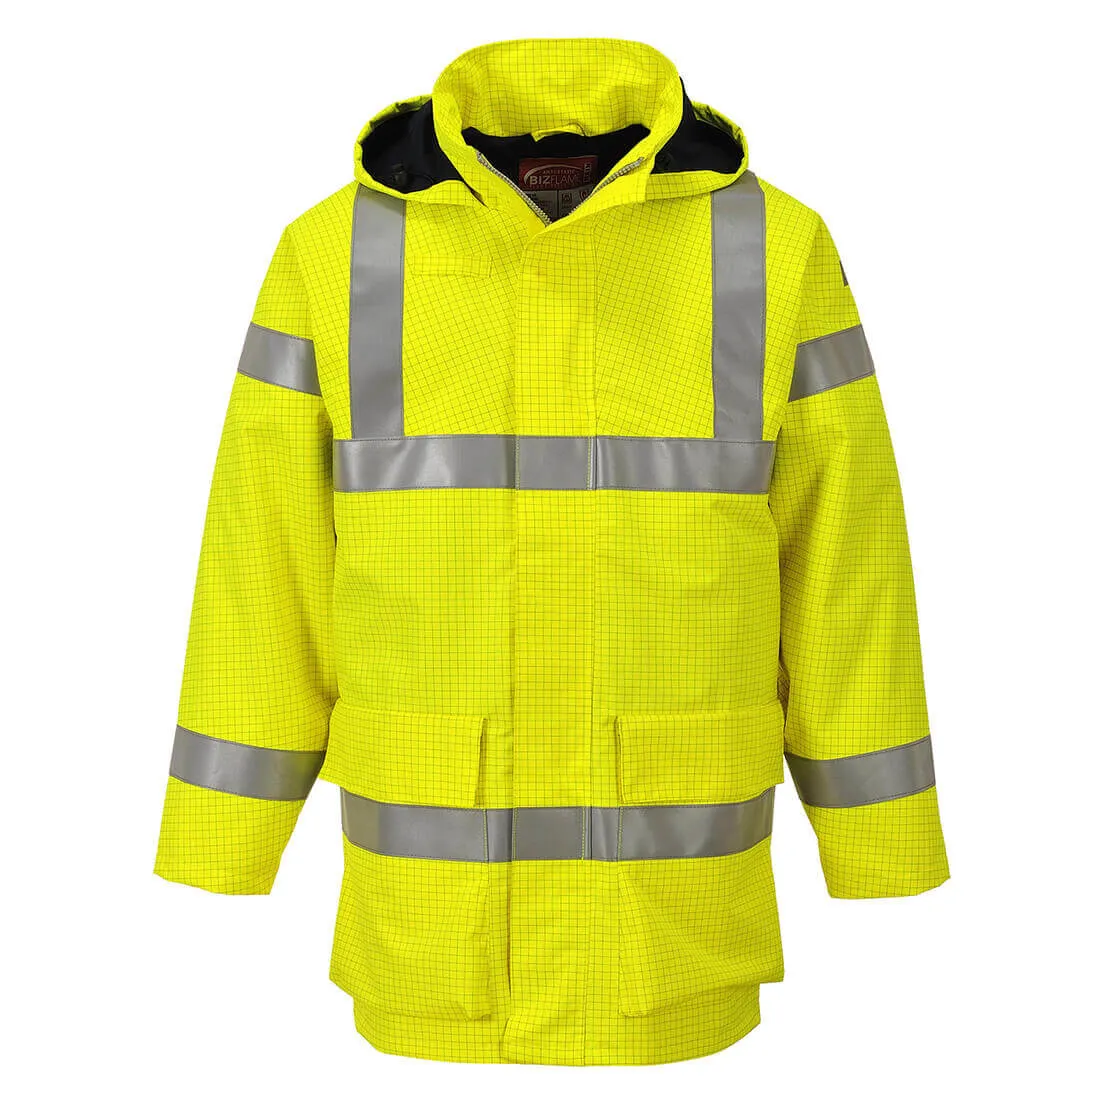 Biz Flame Hi Vis Flame Resistant Rain Multi Lite Jacket - Yellow, 3XL